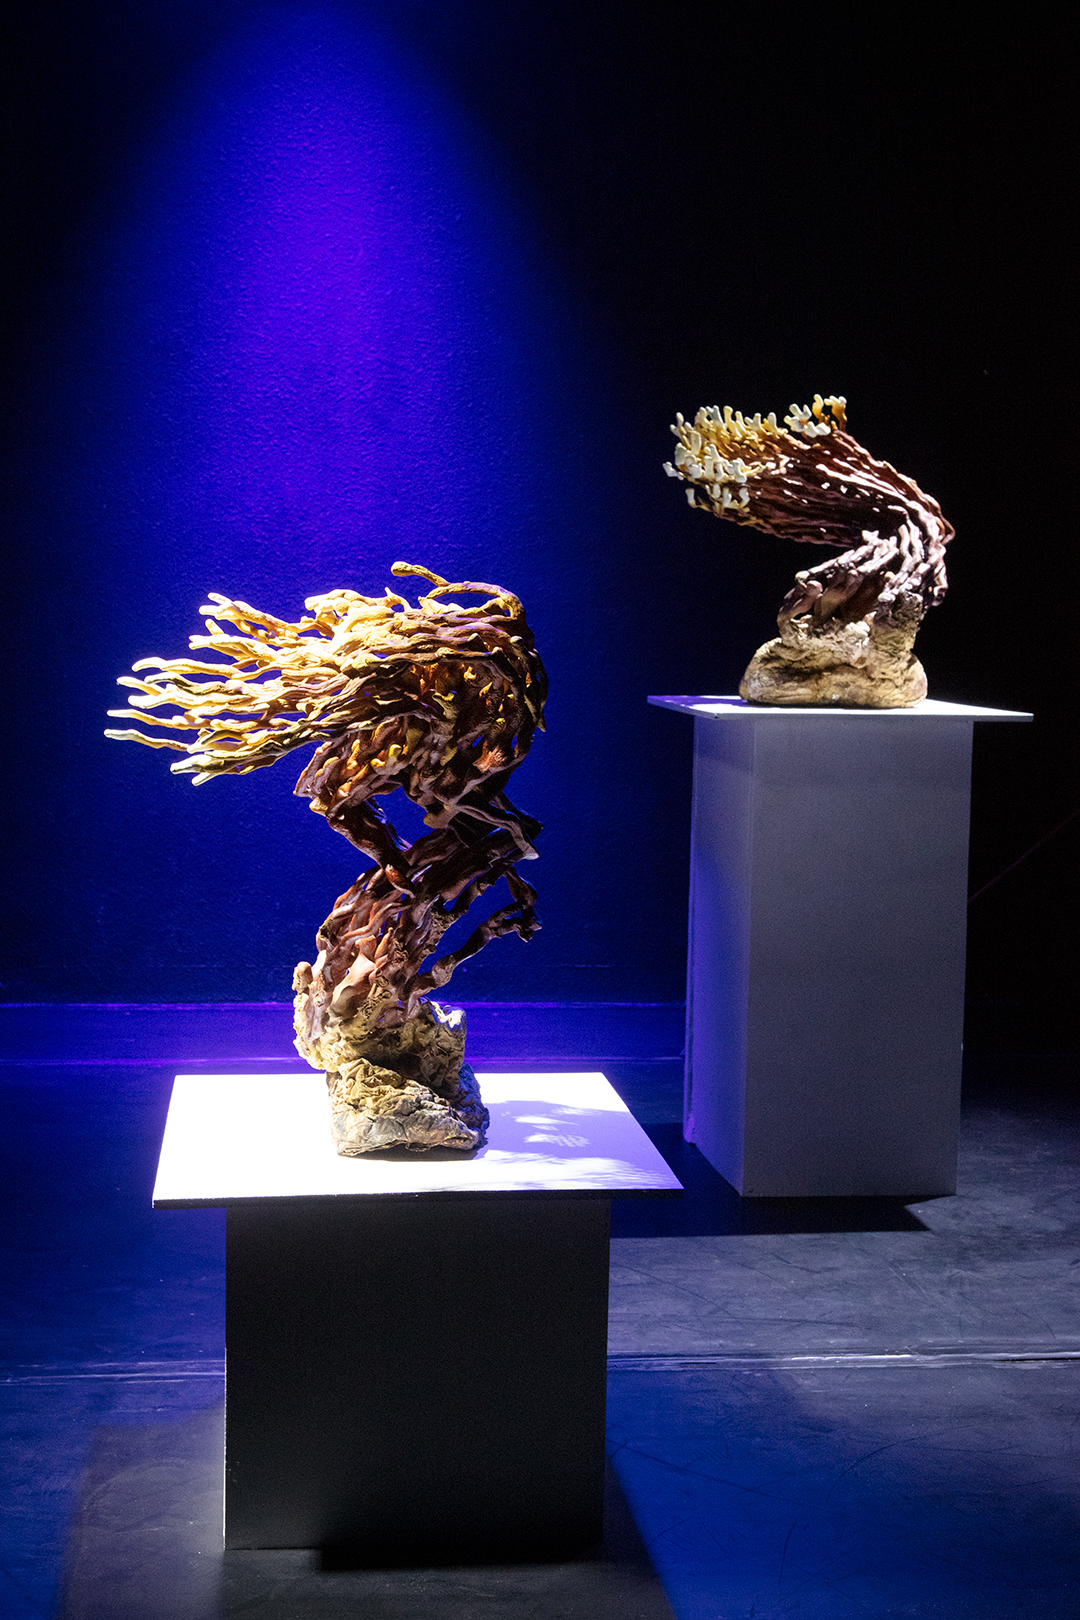 Installation shot of two mushroom specemins on white pedestals under dramatic spotlights